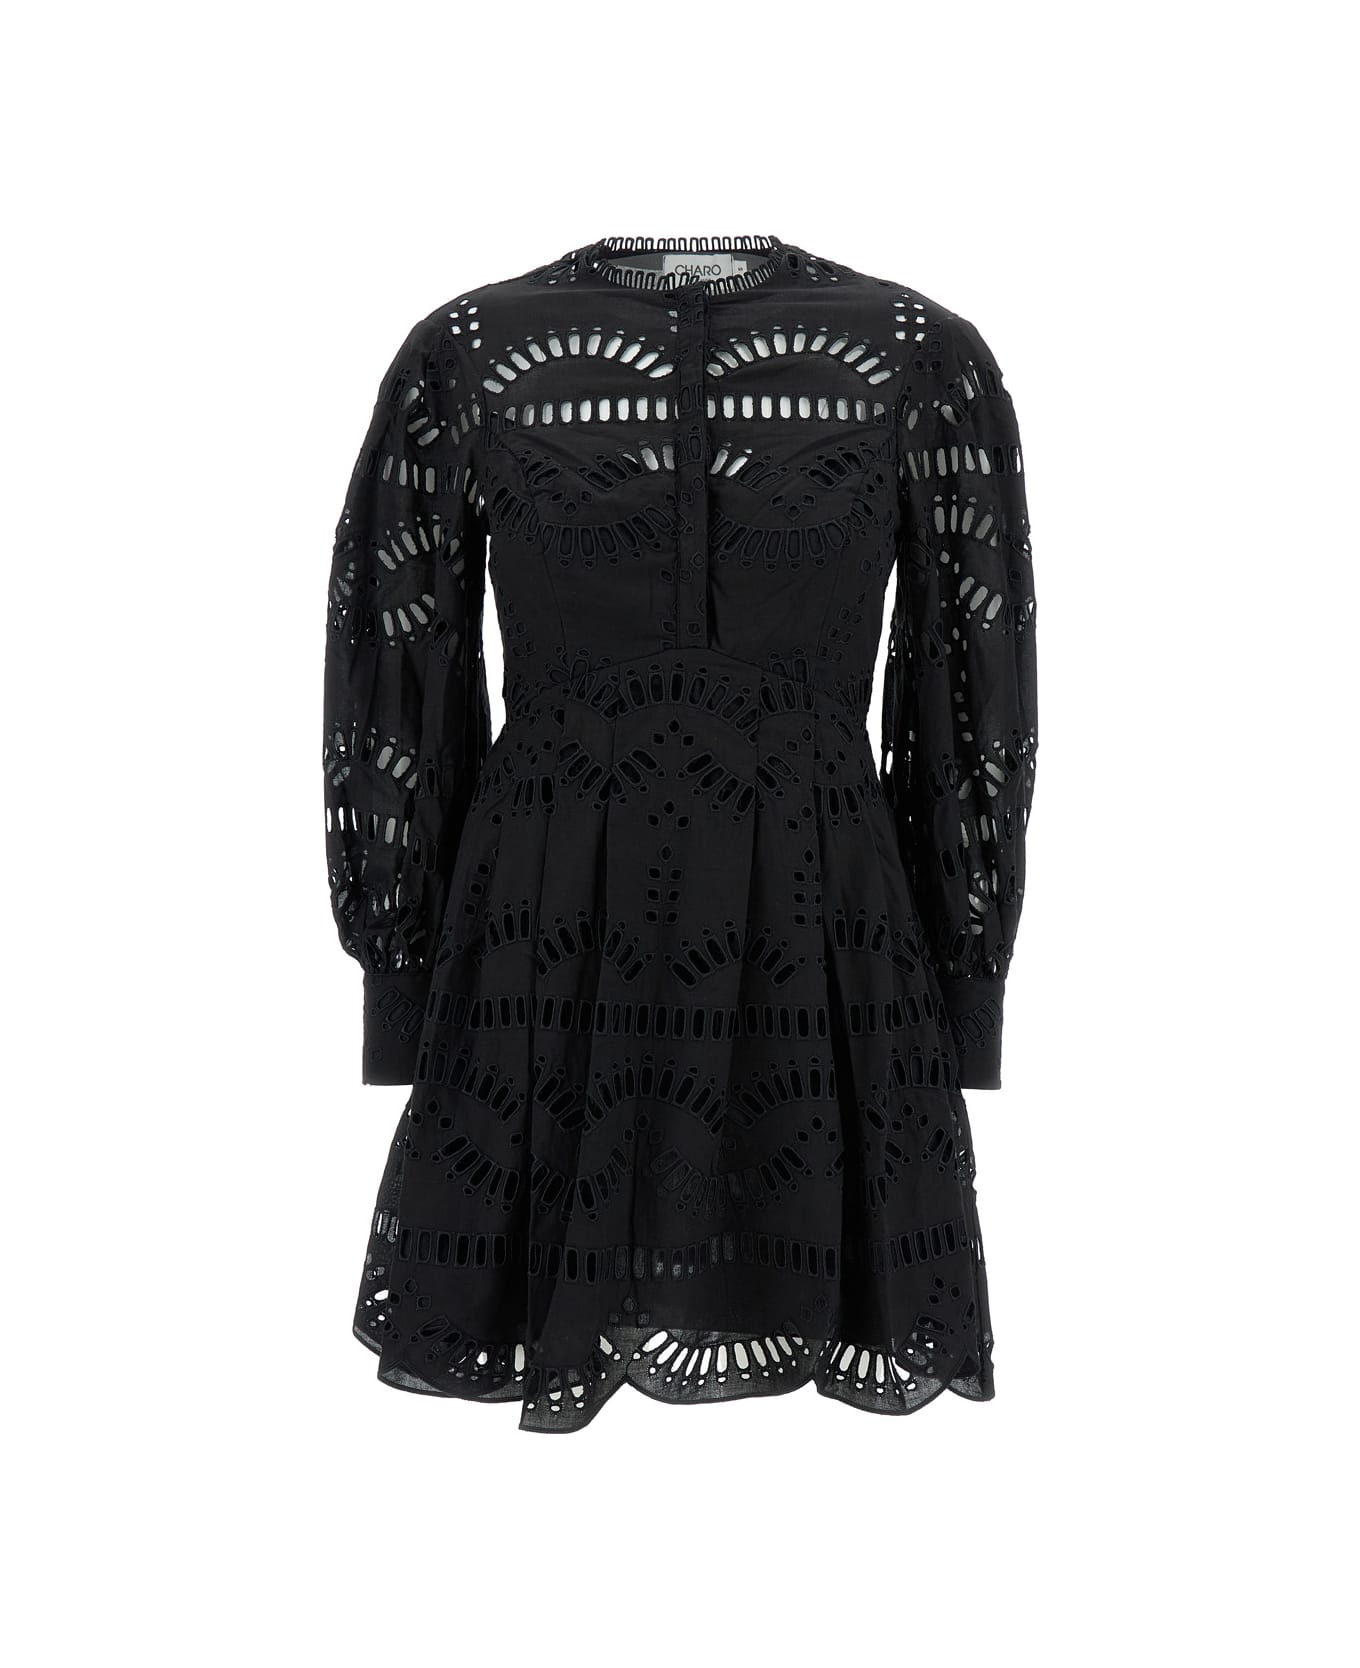 Charo Ruiz 'franca' Mini Black Dress With Floreal Print In Cotton Blend Woman - Black